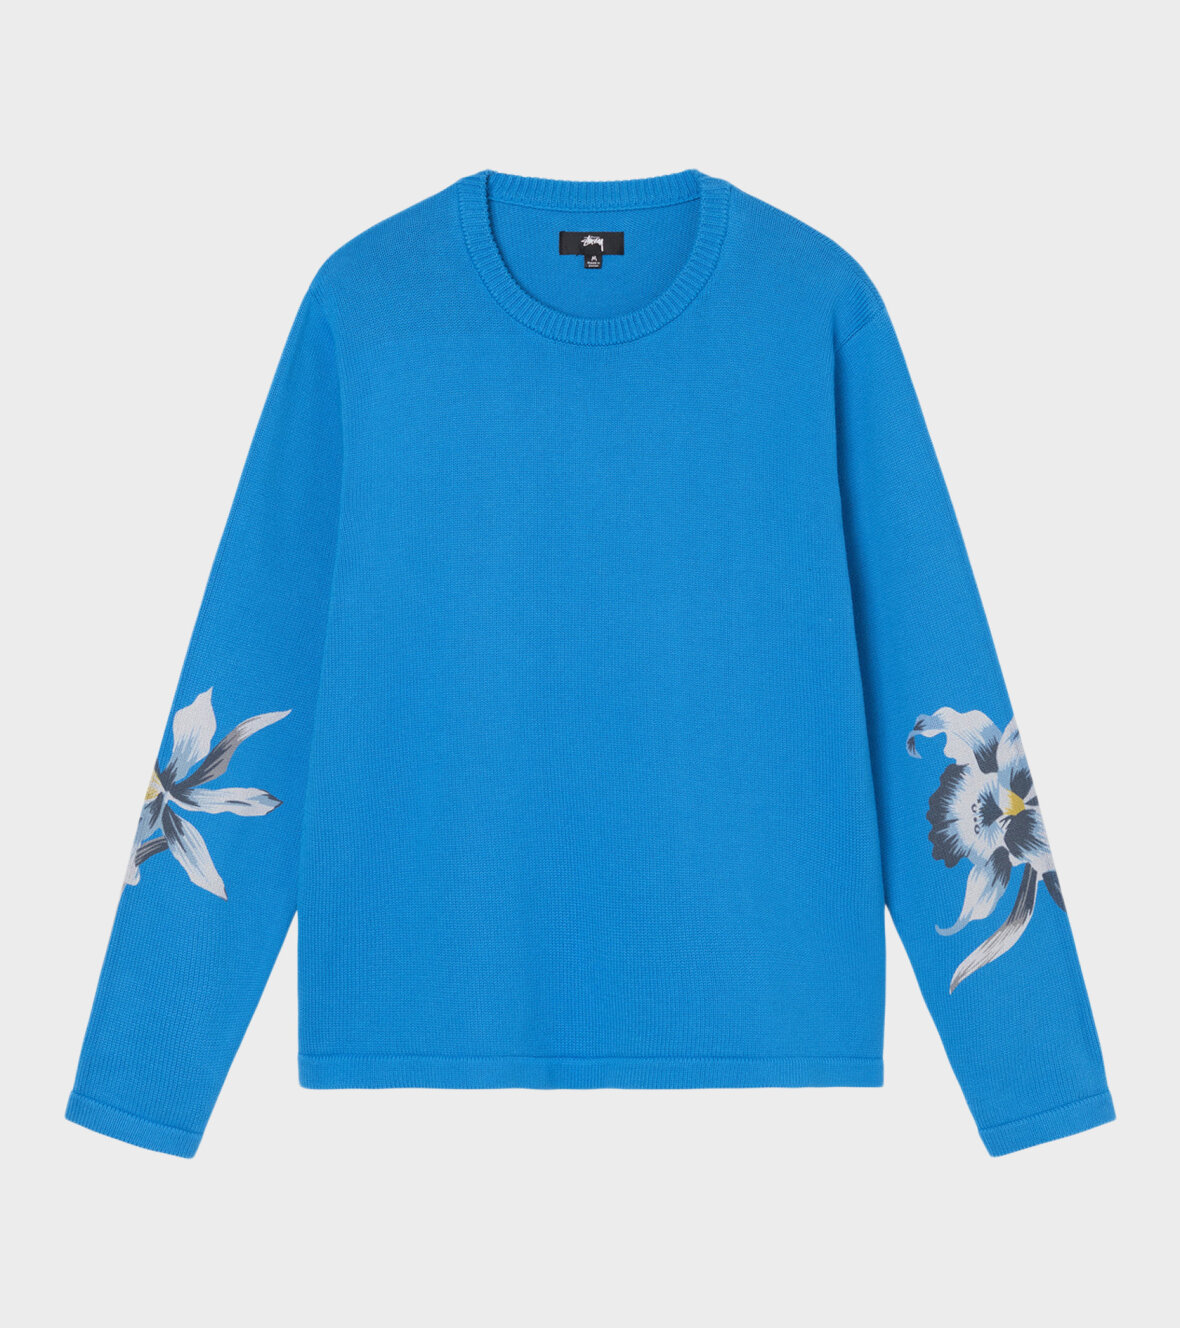 dr. Adams - Stüssy Orchid Sweater Blue